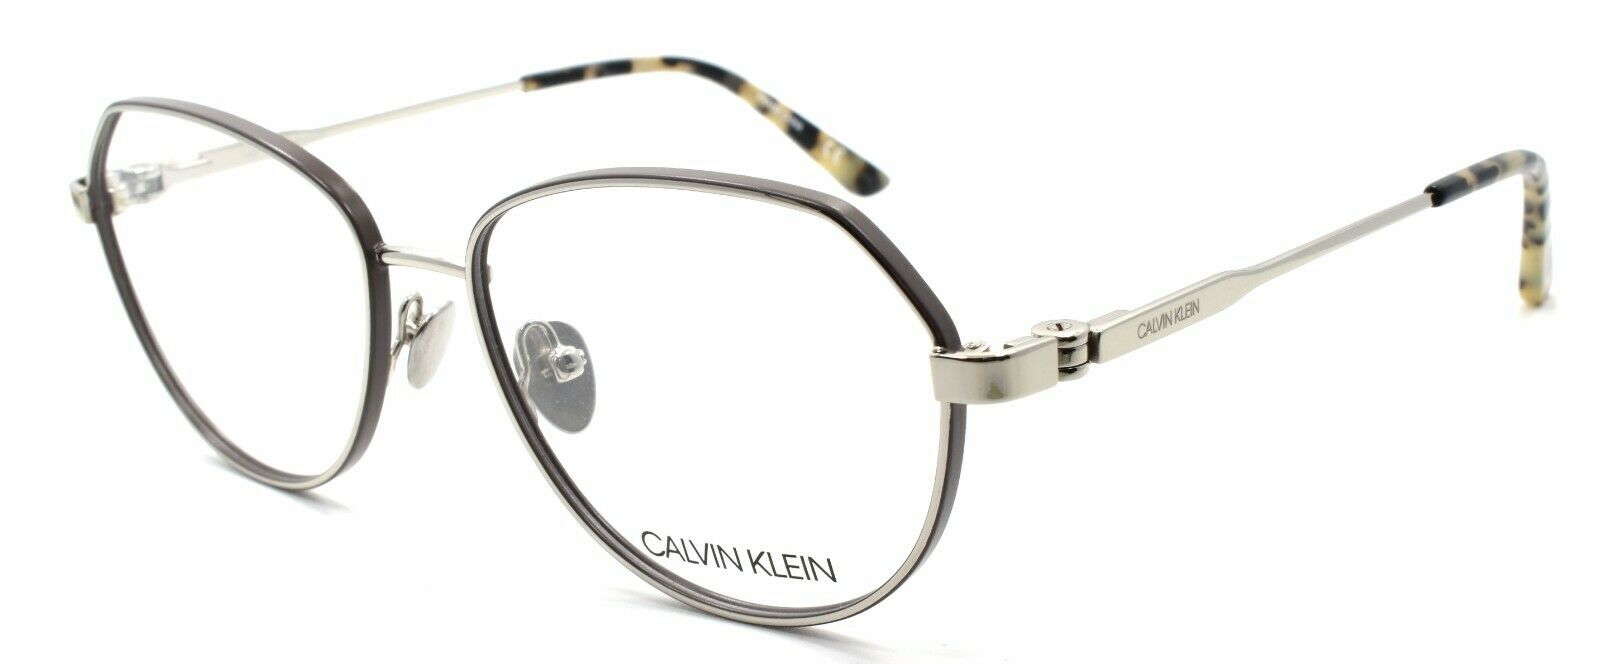 1-Calvin Klein CK19113 045 Women's Eyeglasses Frames 53-15-140 Silver-883901114416-IKSpecs